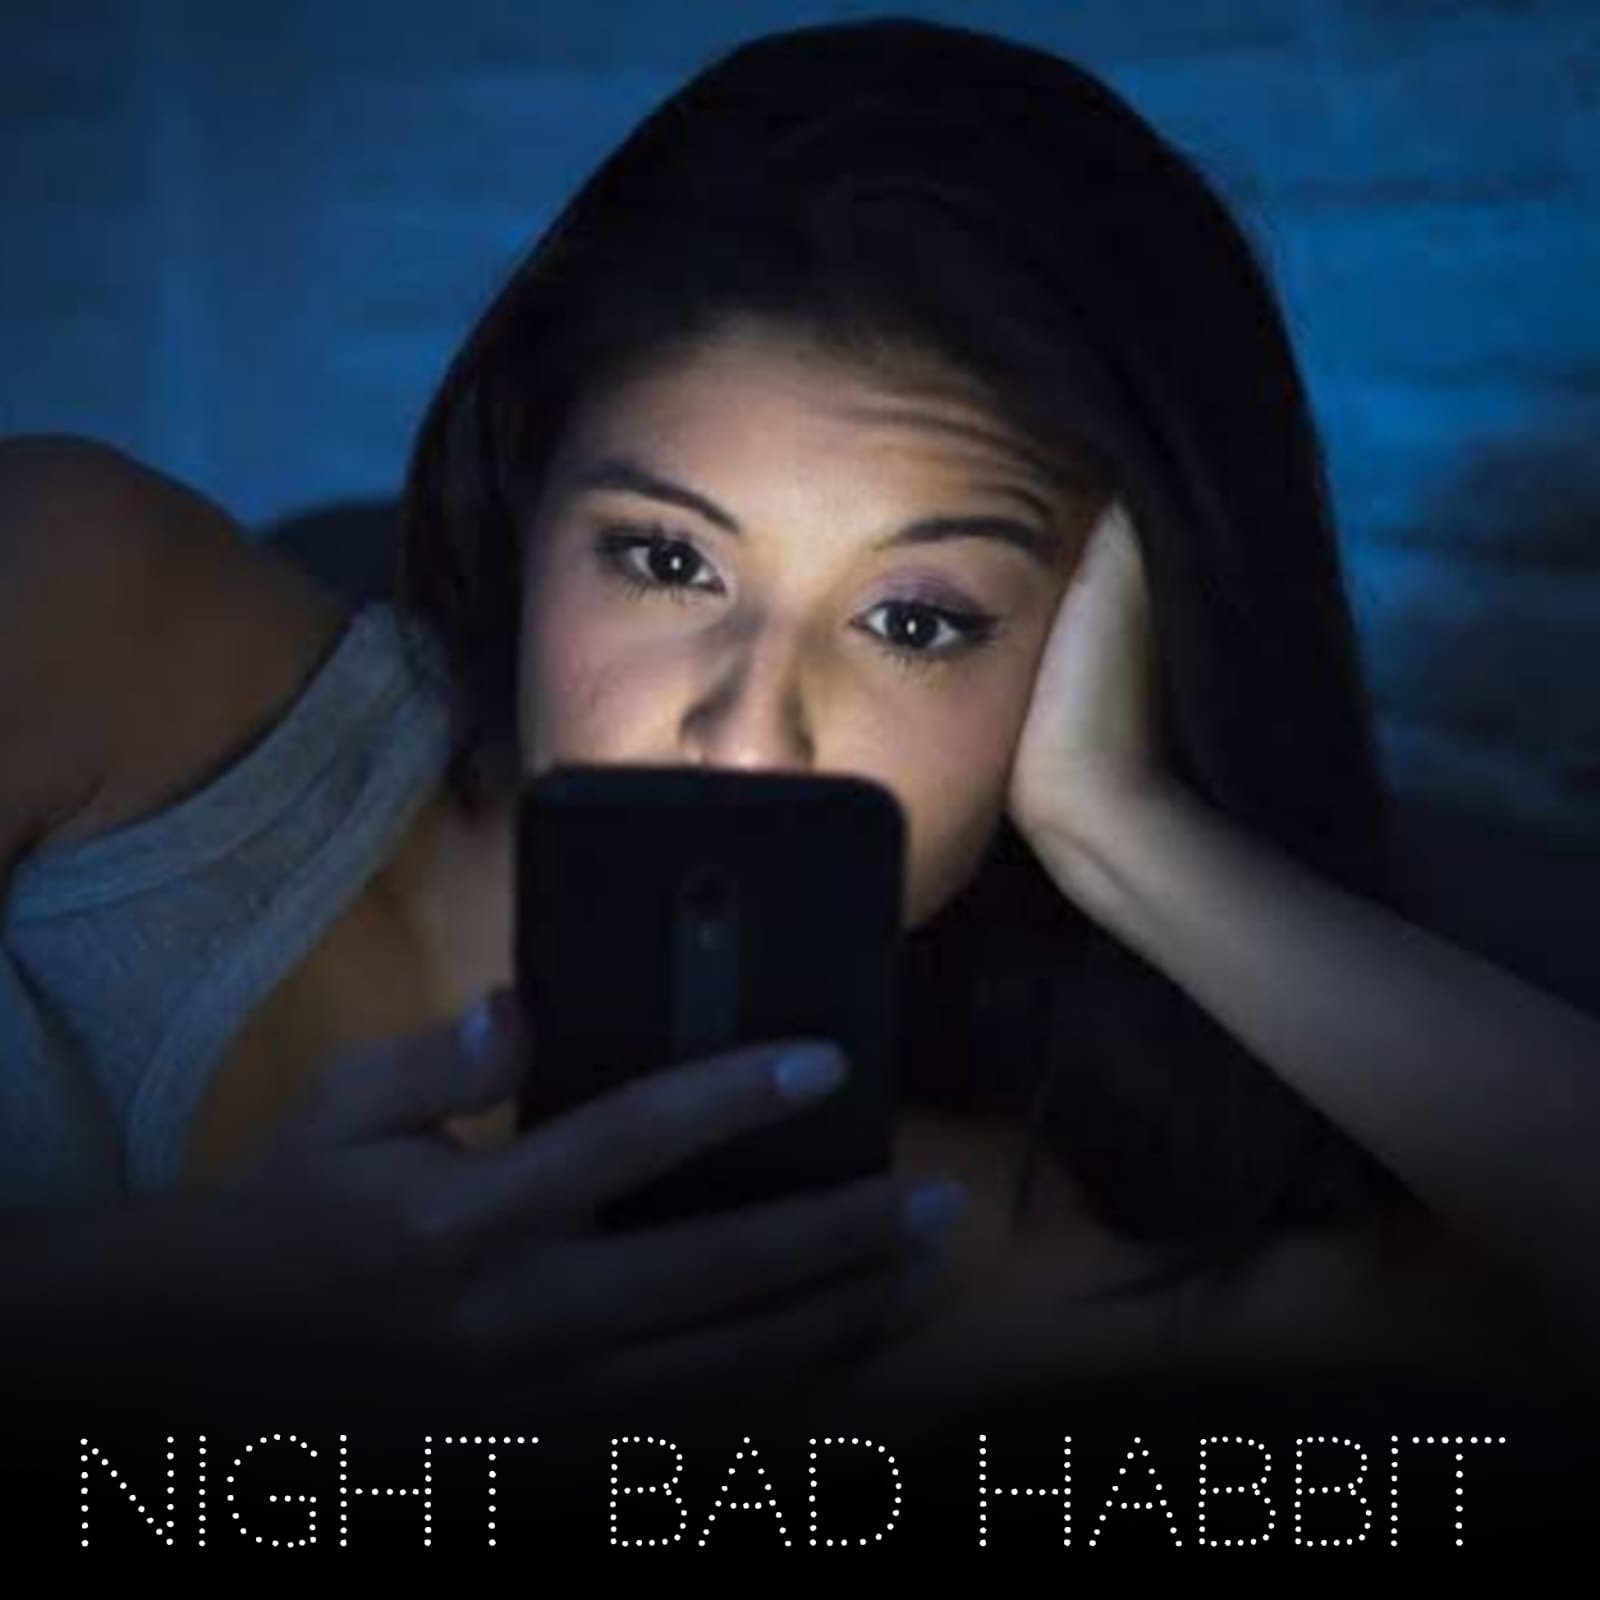 Night Bad Habit: Bad habit of phone can take you to hospital